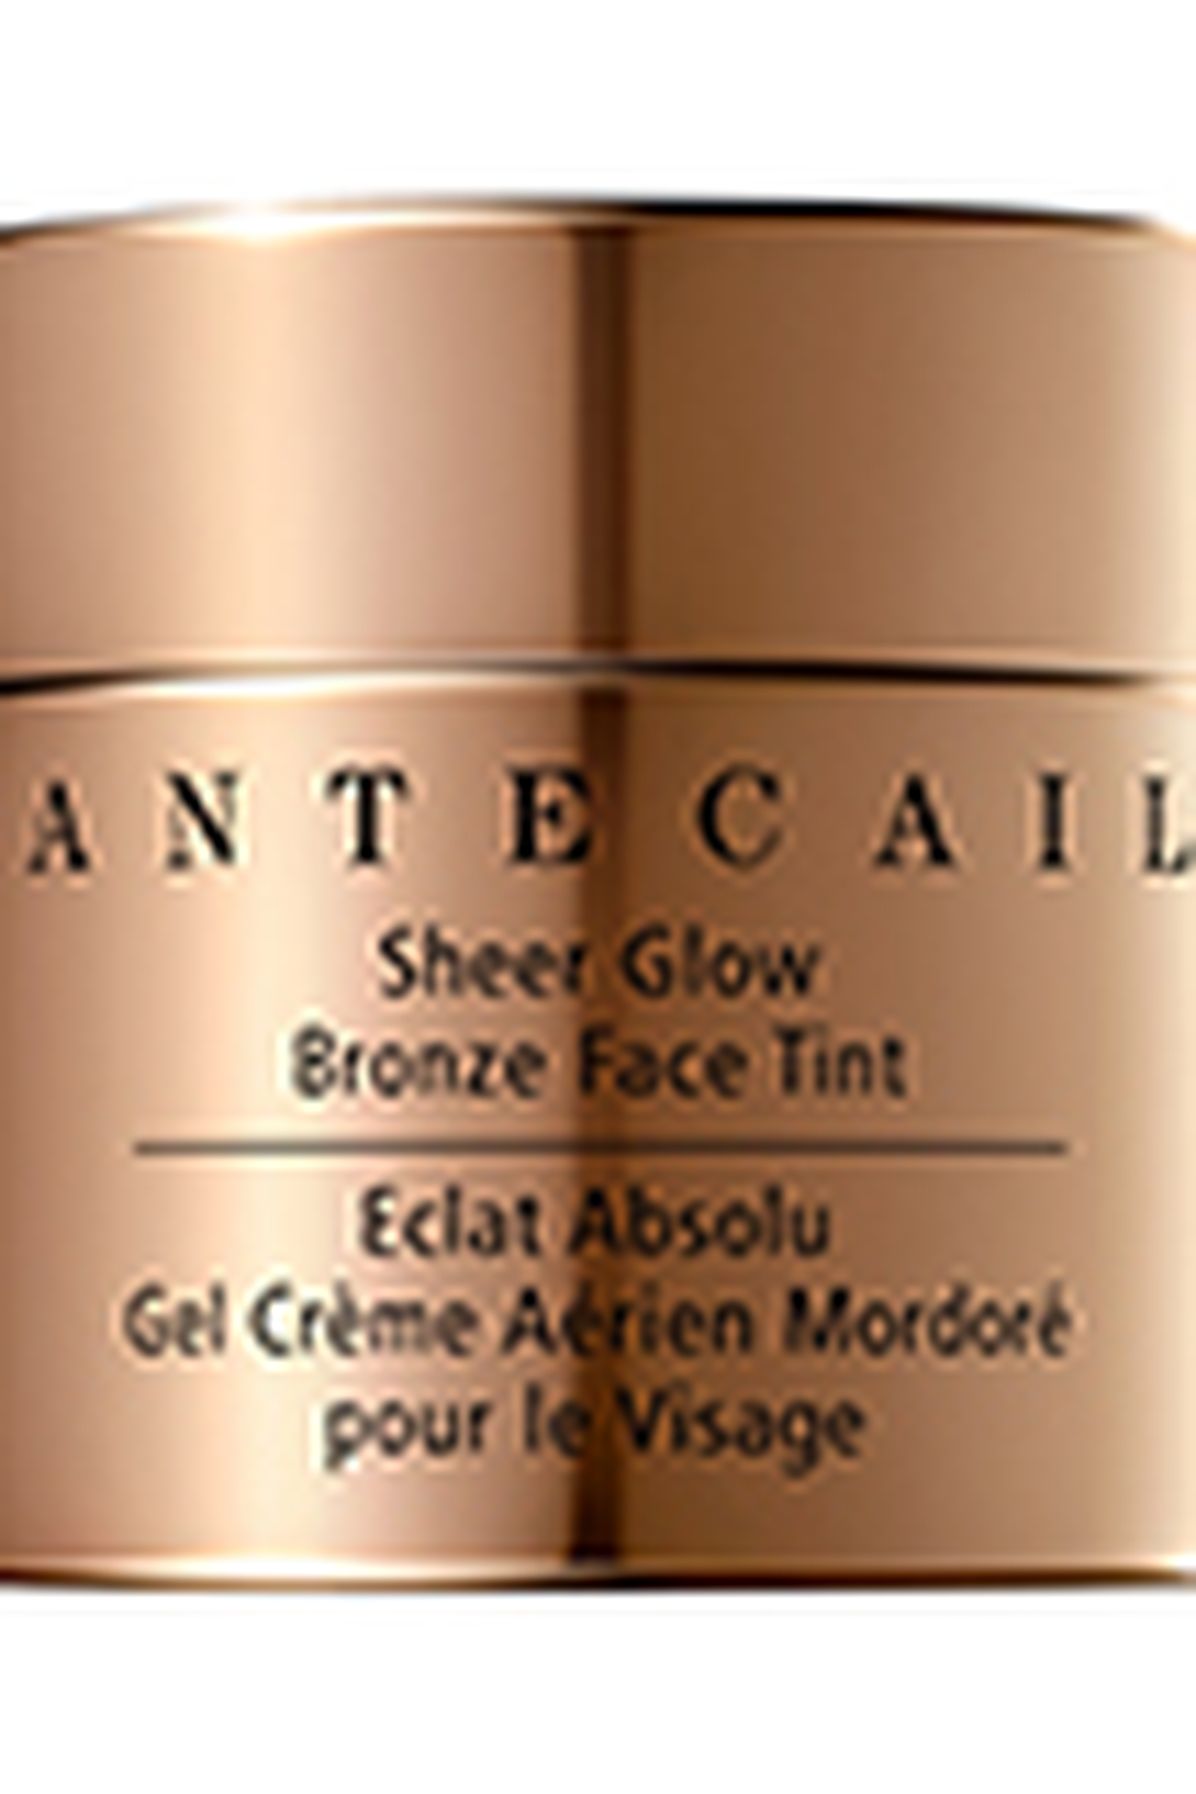 Chantecaille Sheer Glow Bronze Face Tint 30 g